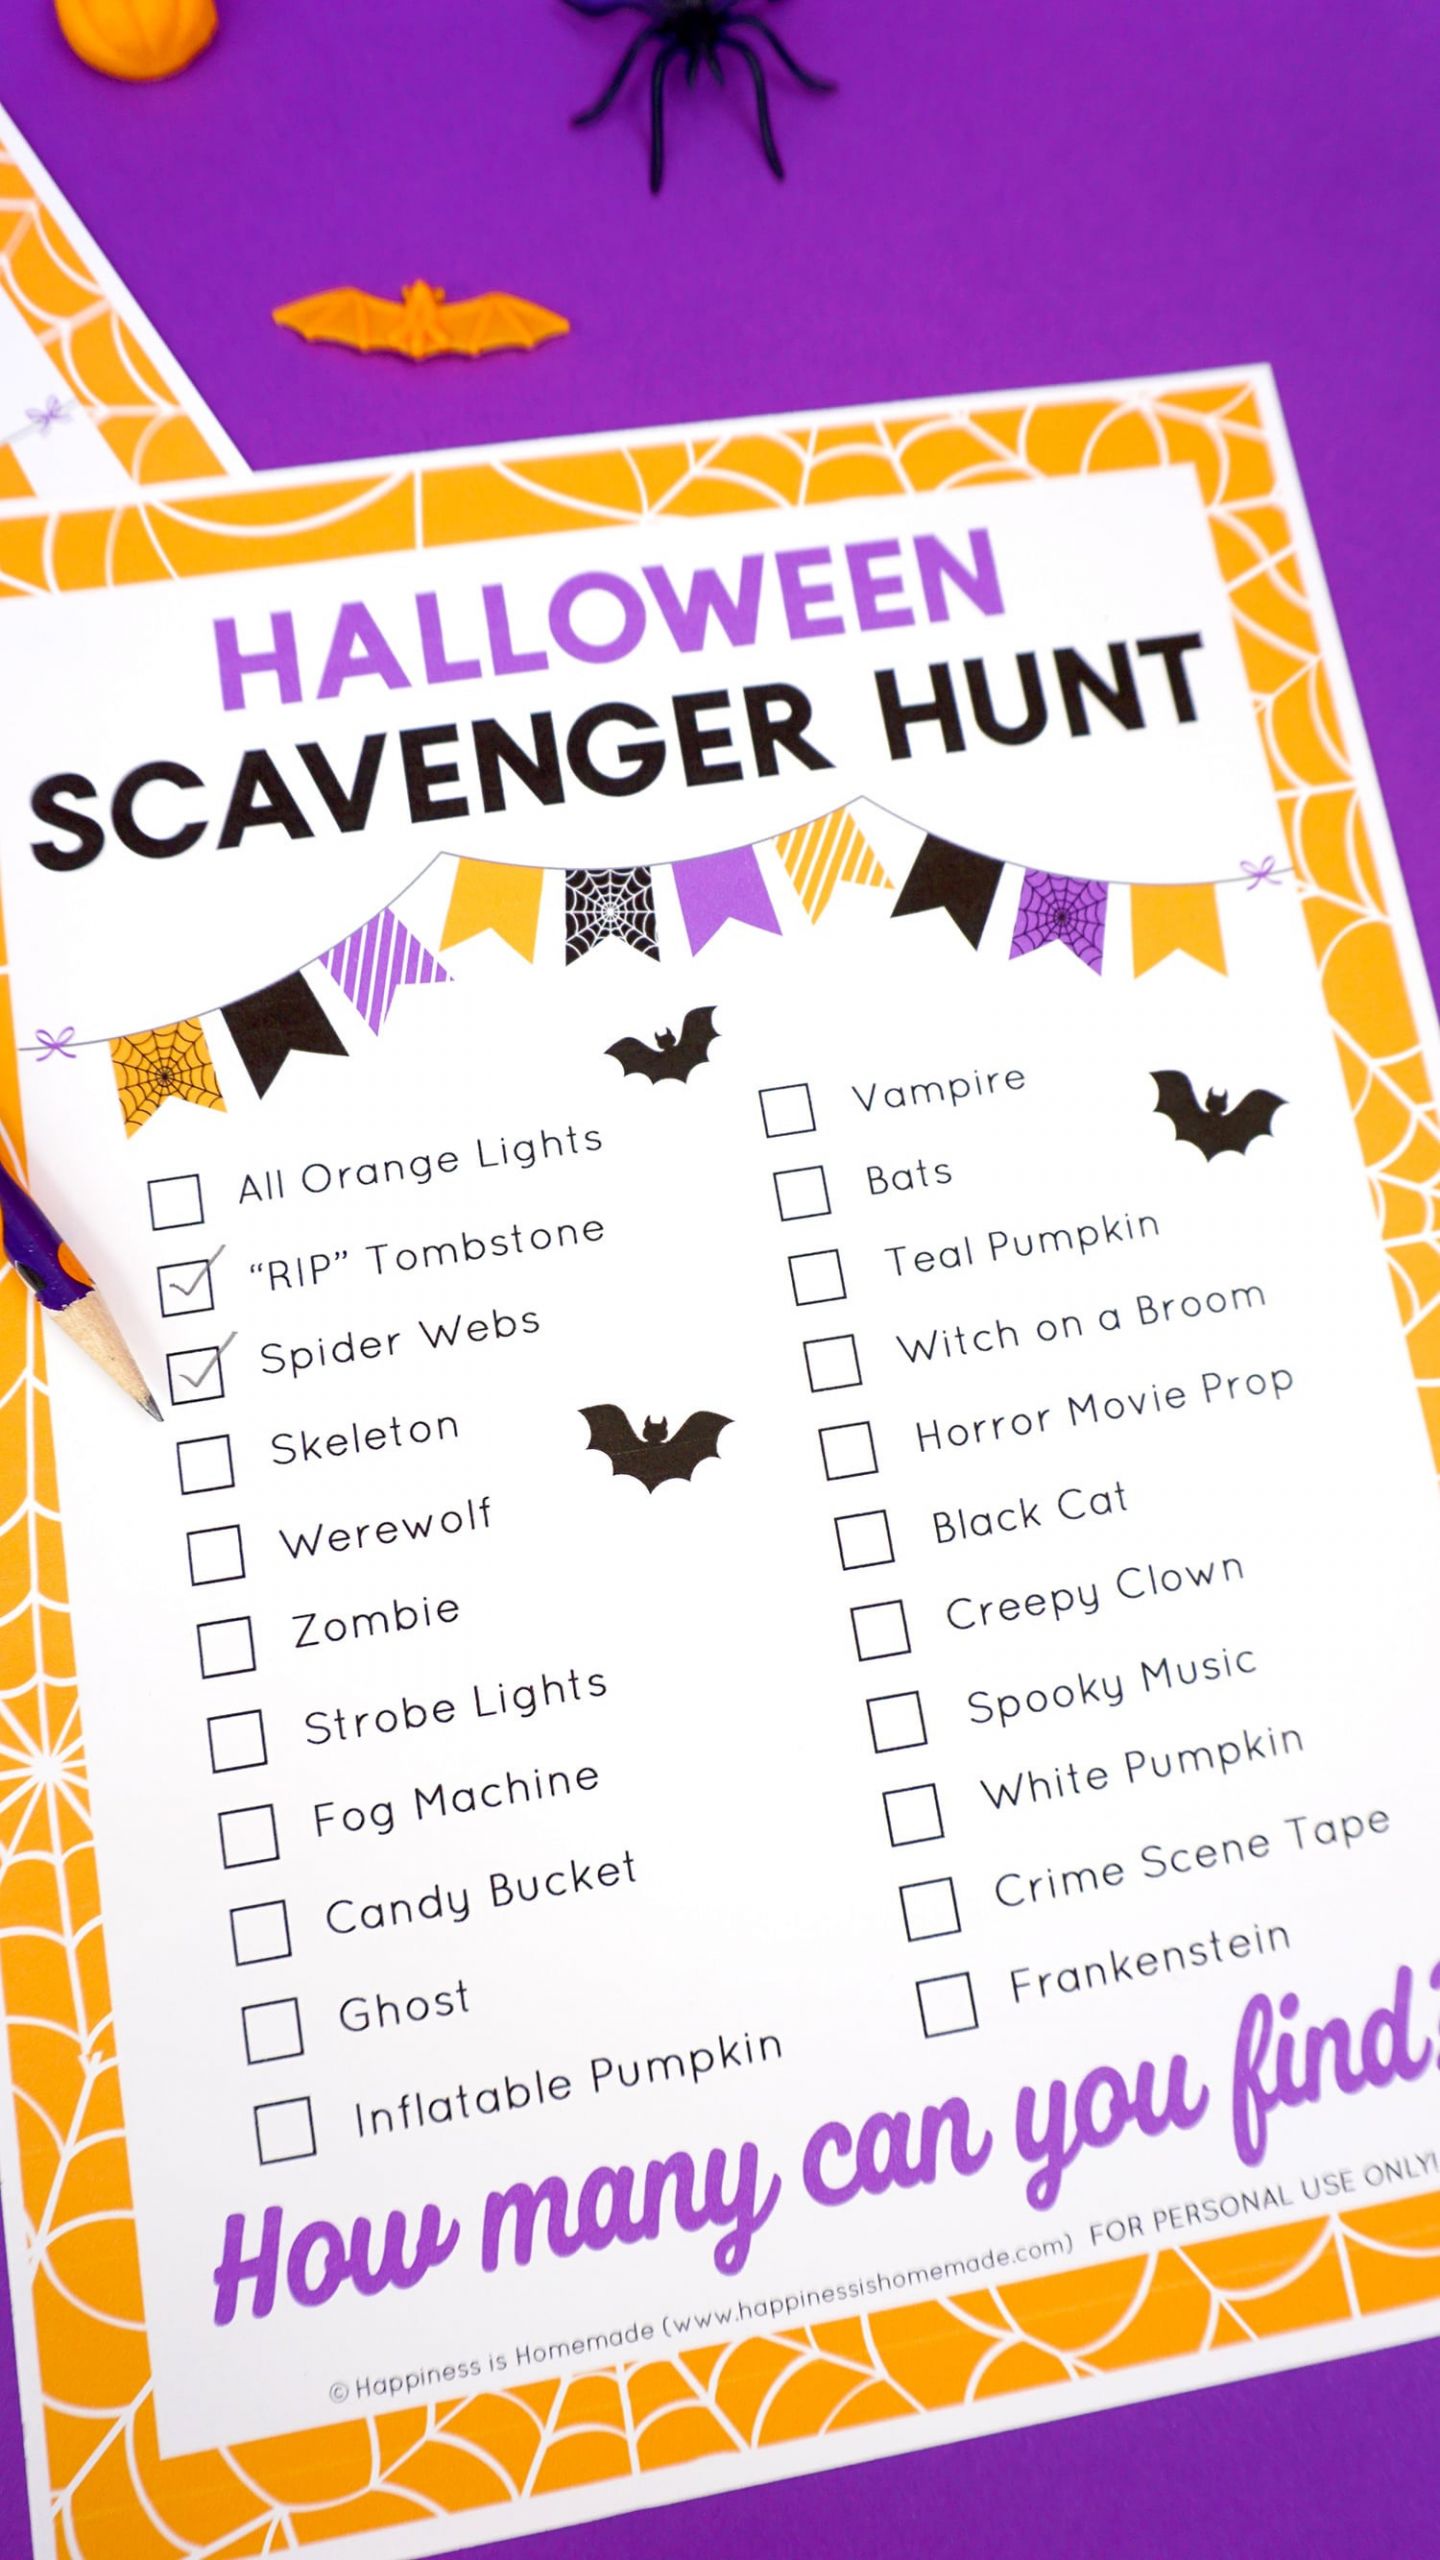 Halloween Scavenger Hunt Ideas
 Free Printable Halloween Scavenger Hunt Happiness is